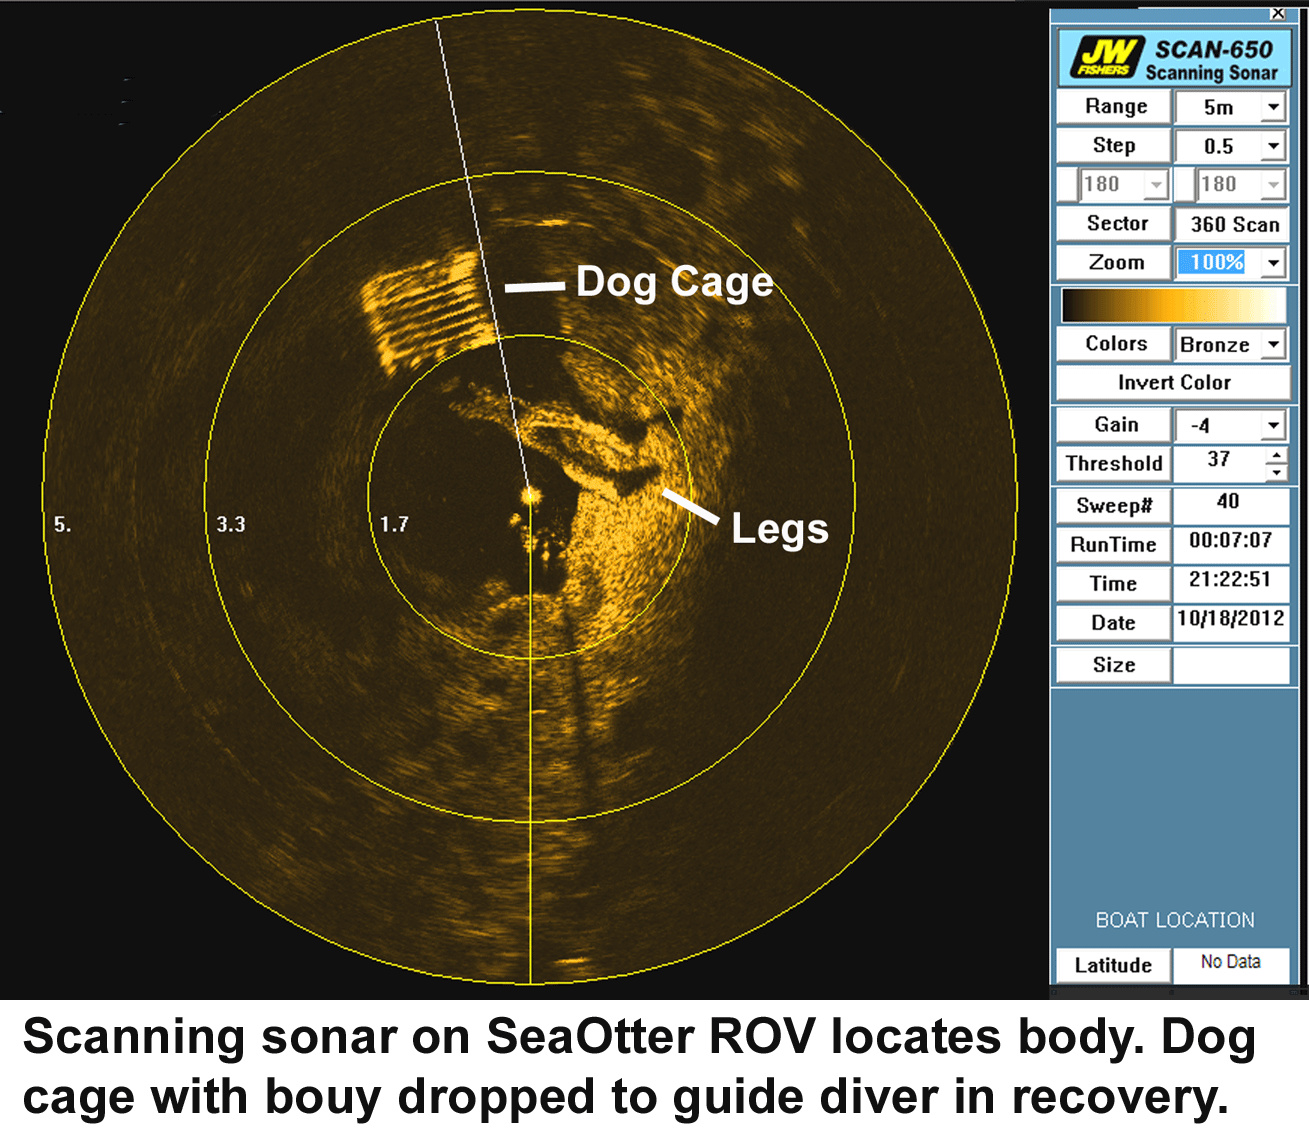 Scan-650 Scanning Sonar locates body, dog cage marker deployed